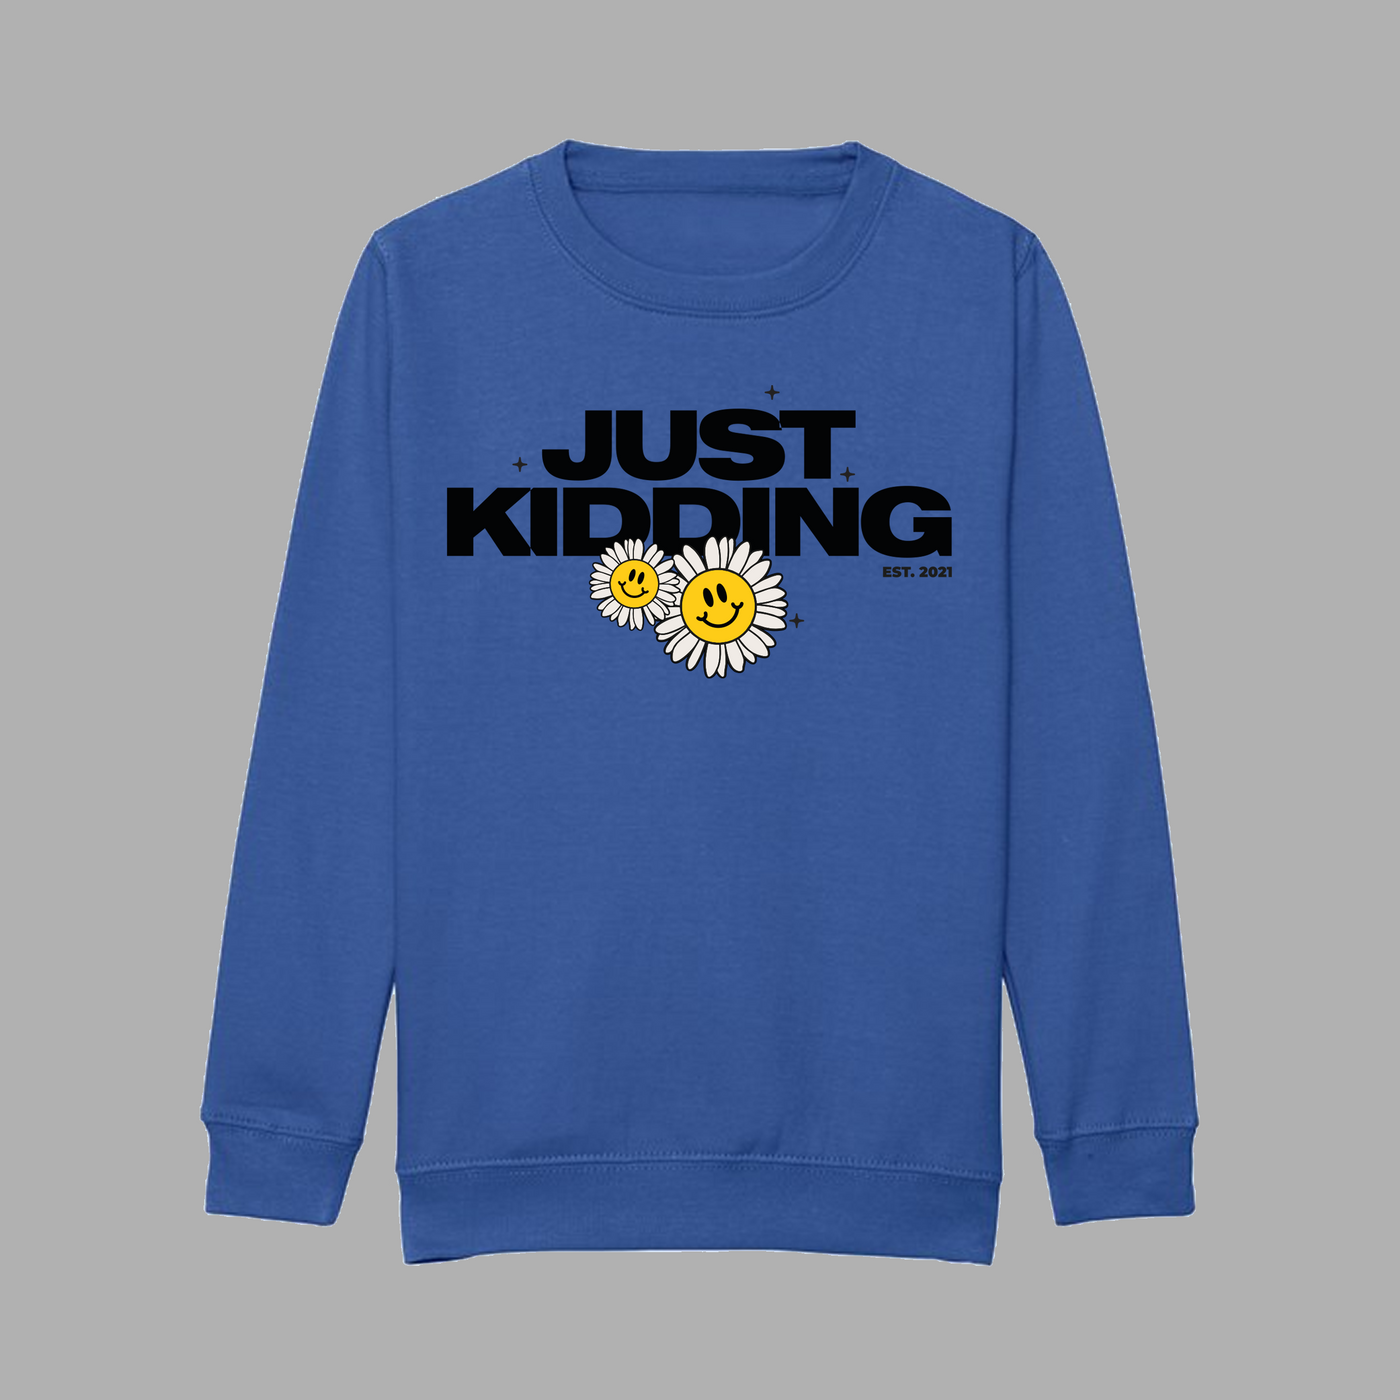 Just Kidding Royal Blue Sweatshirt